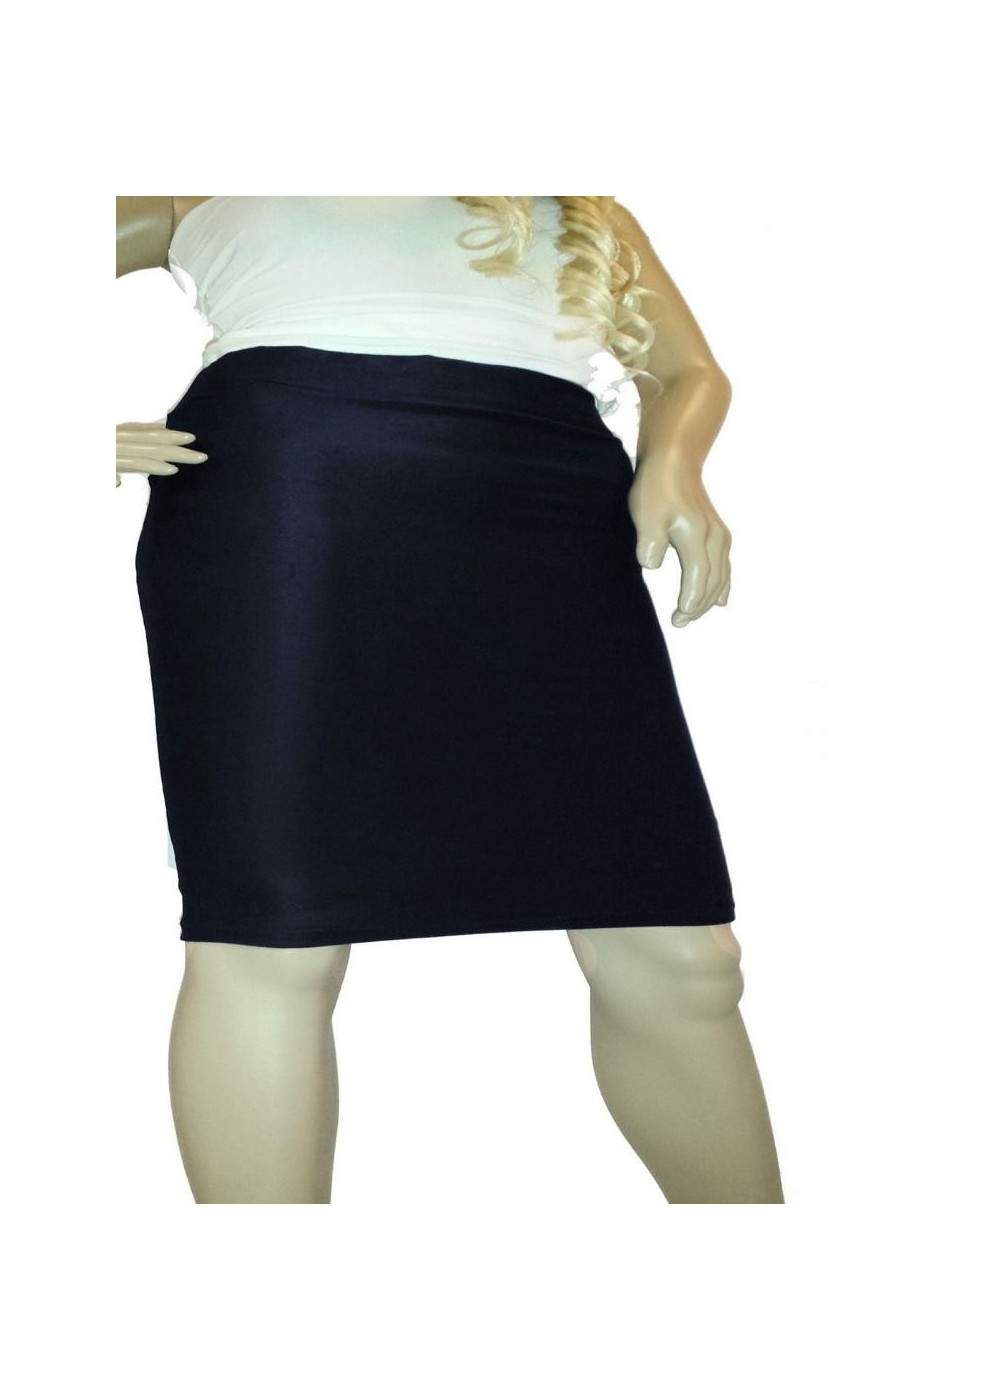 Blue Pencil Skirt Stretch Sizes 44 - 52 Lengths 25cm - 60cm